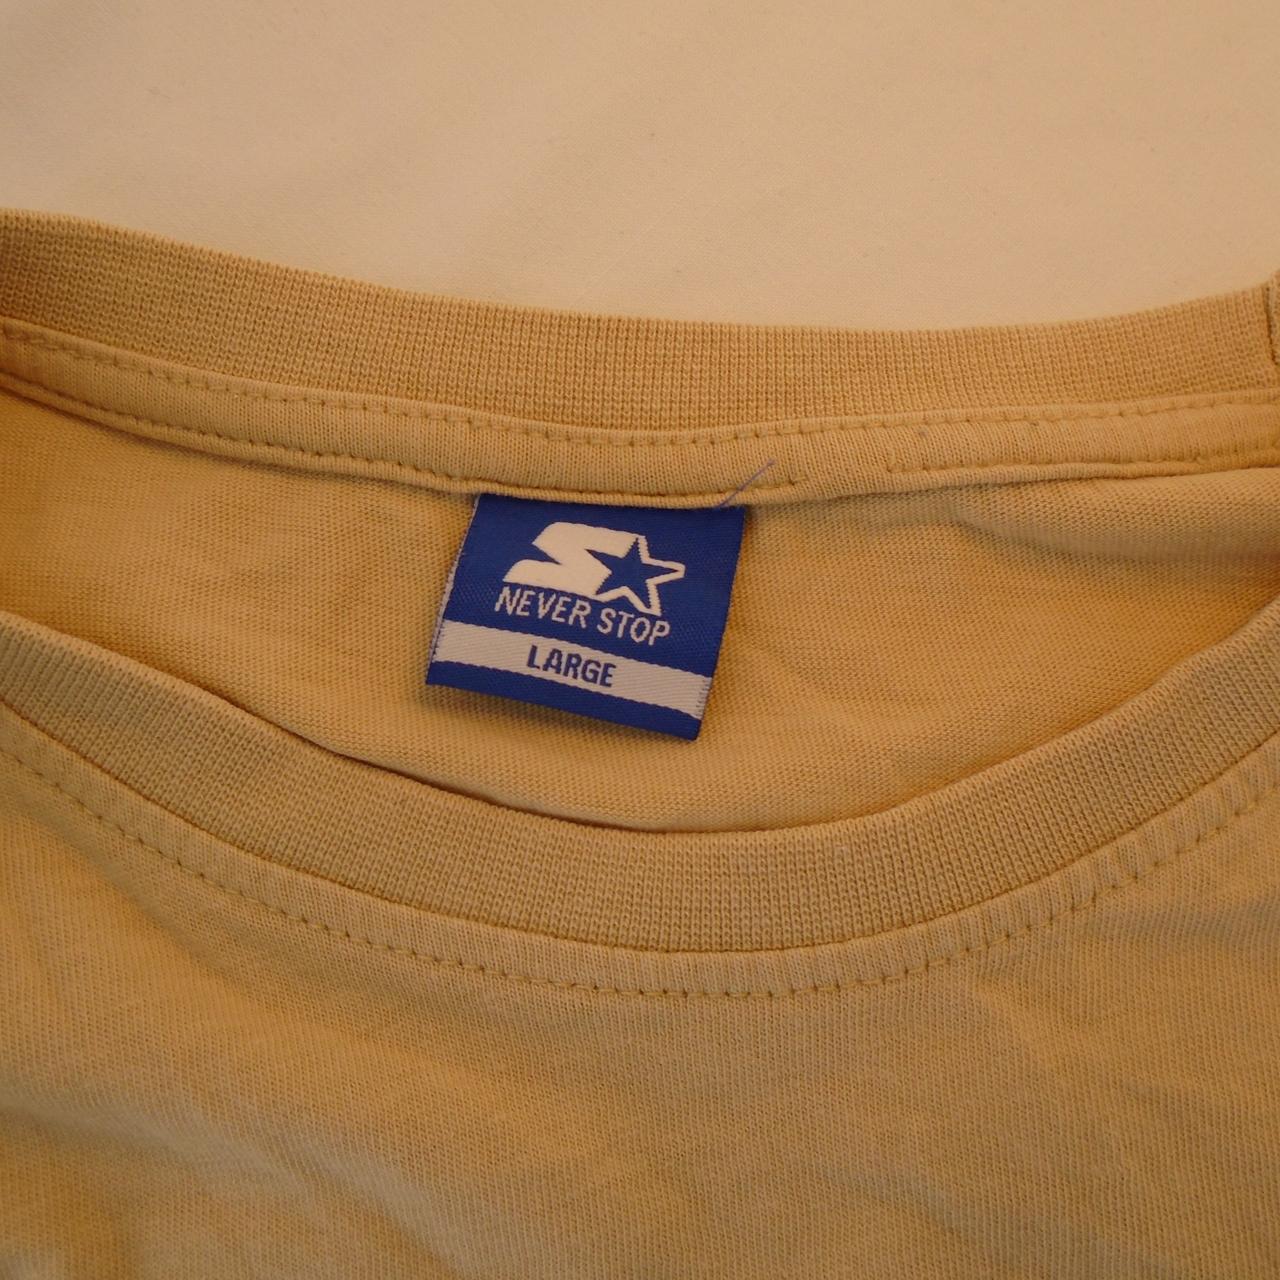 Men's T-Shirt Starter. Multicolor. L. Used. Good